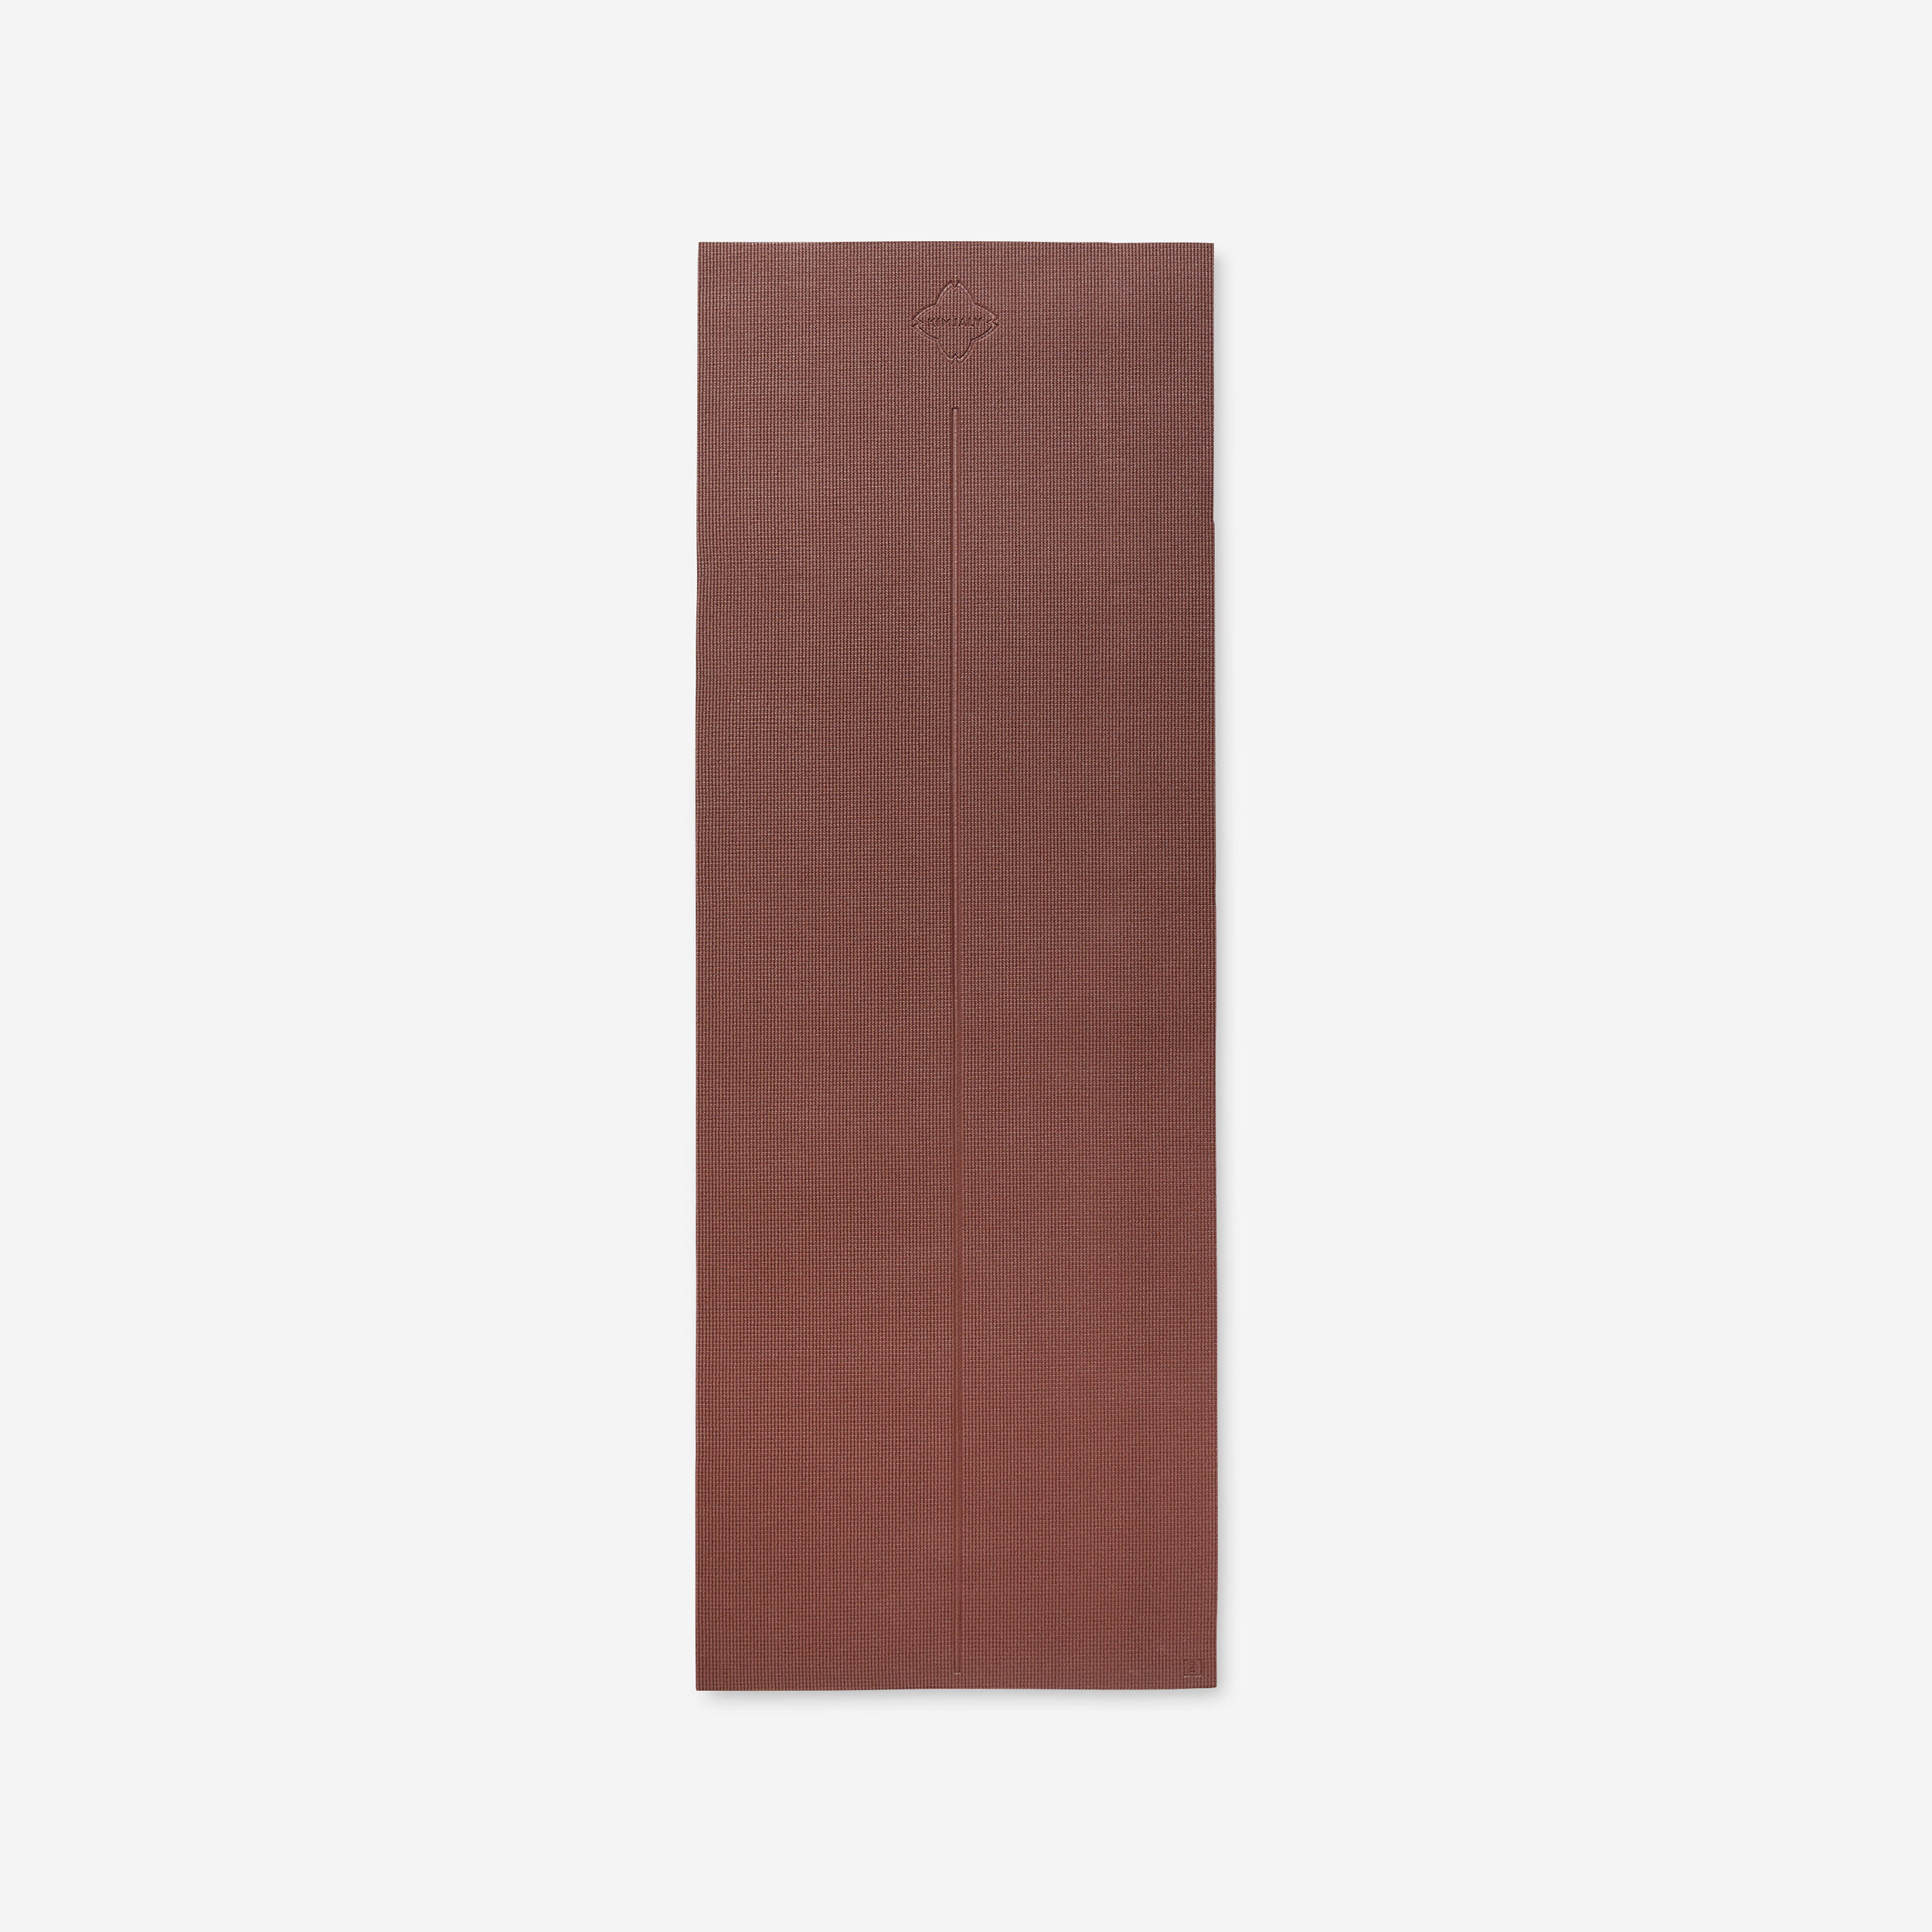 Gentle Yoga Comfort Mat 173 cm ⨯ 61 cm ⨯ 8 mm - Mahogany 1/4